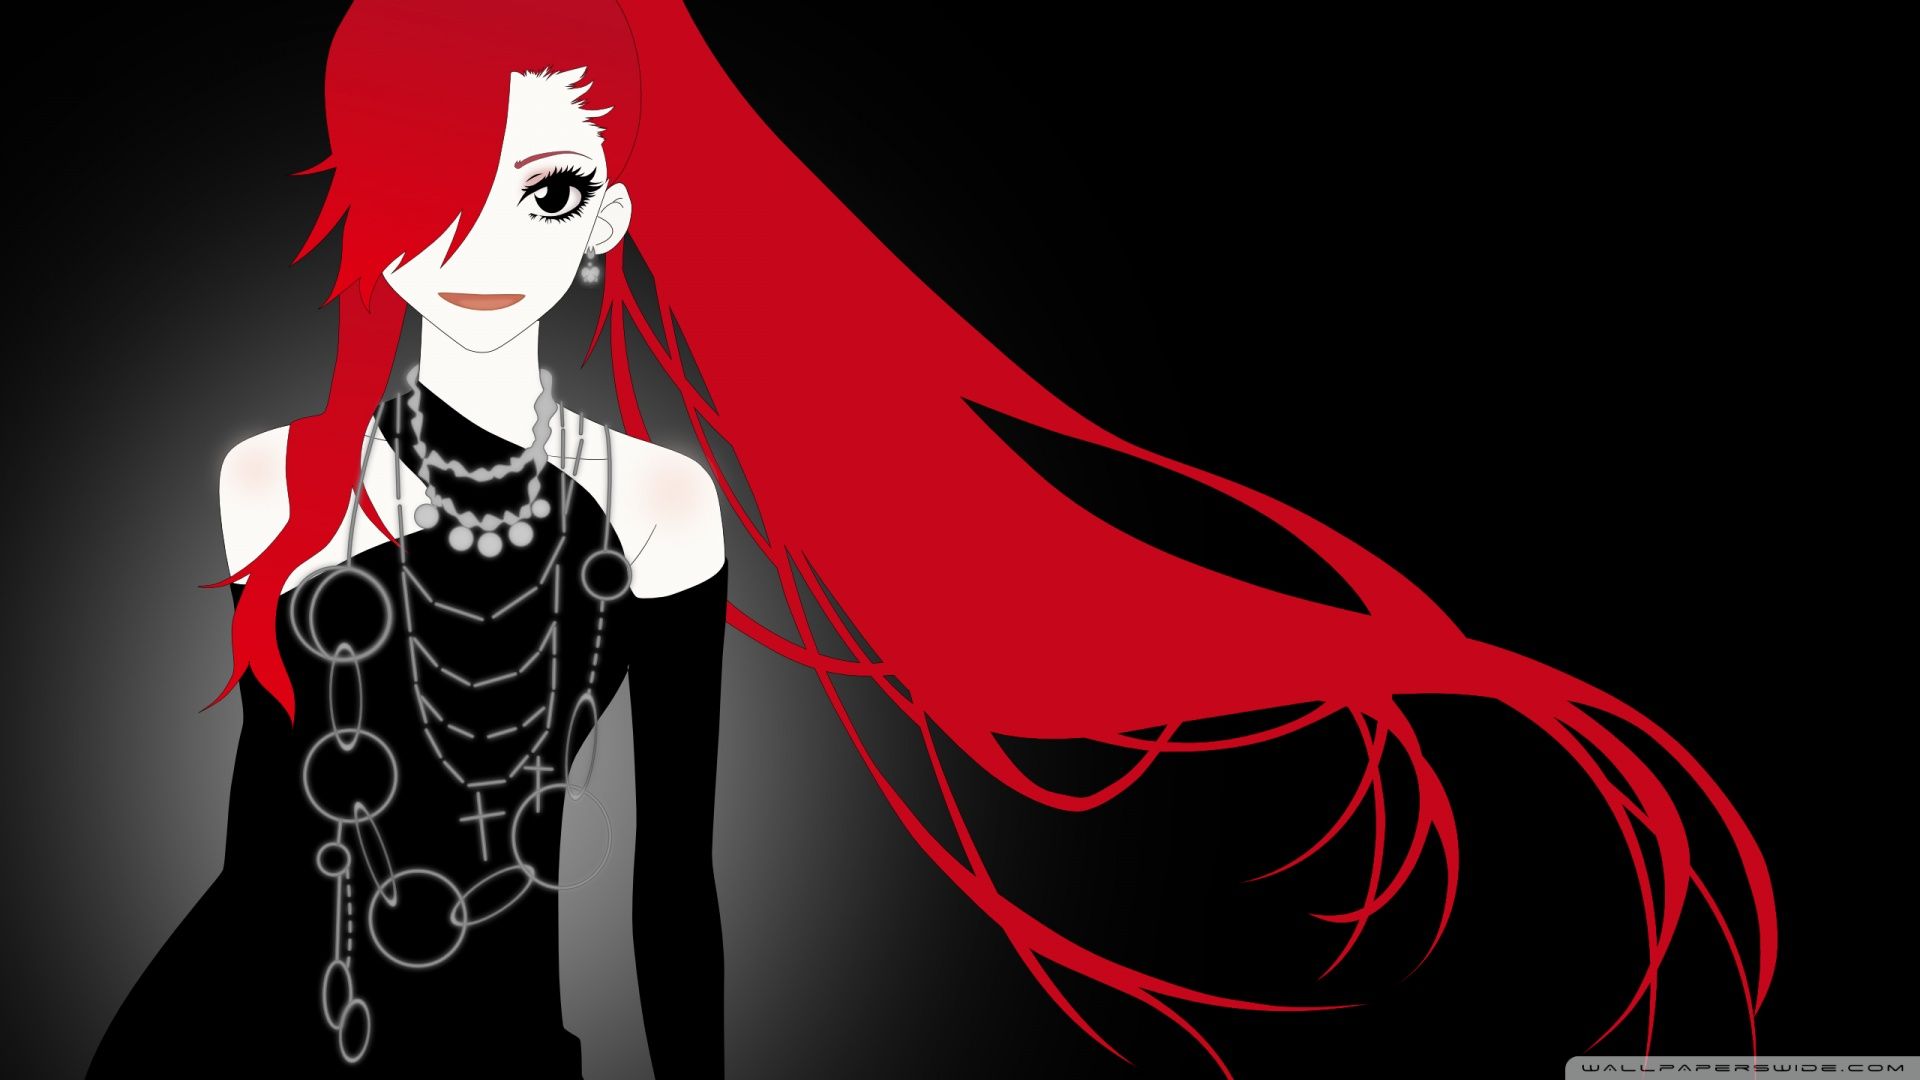 Anime Girl With Red Hair Ultra HD Desktop Background Wallpaper for 4K UHD TV, Tablet